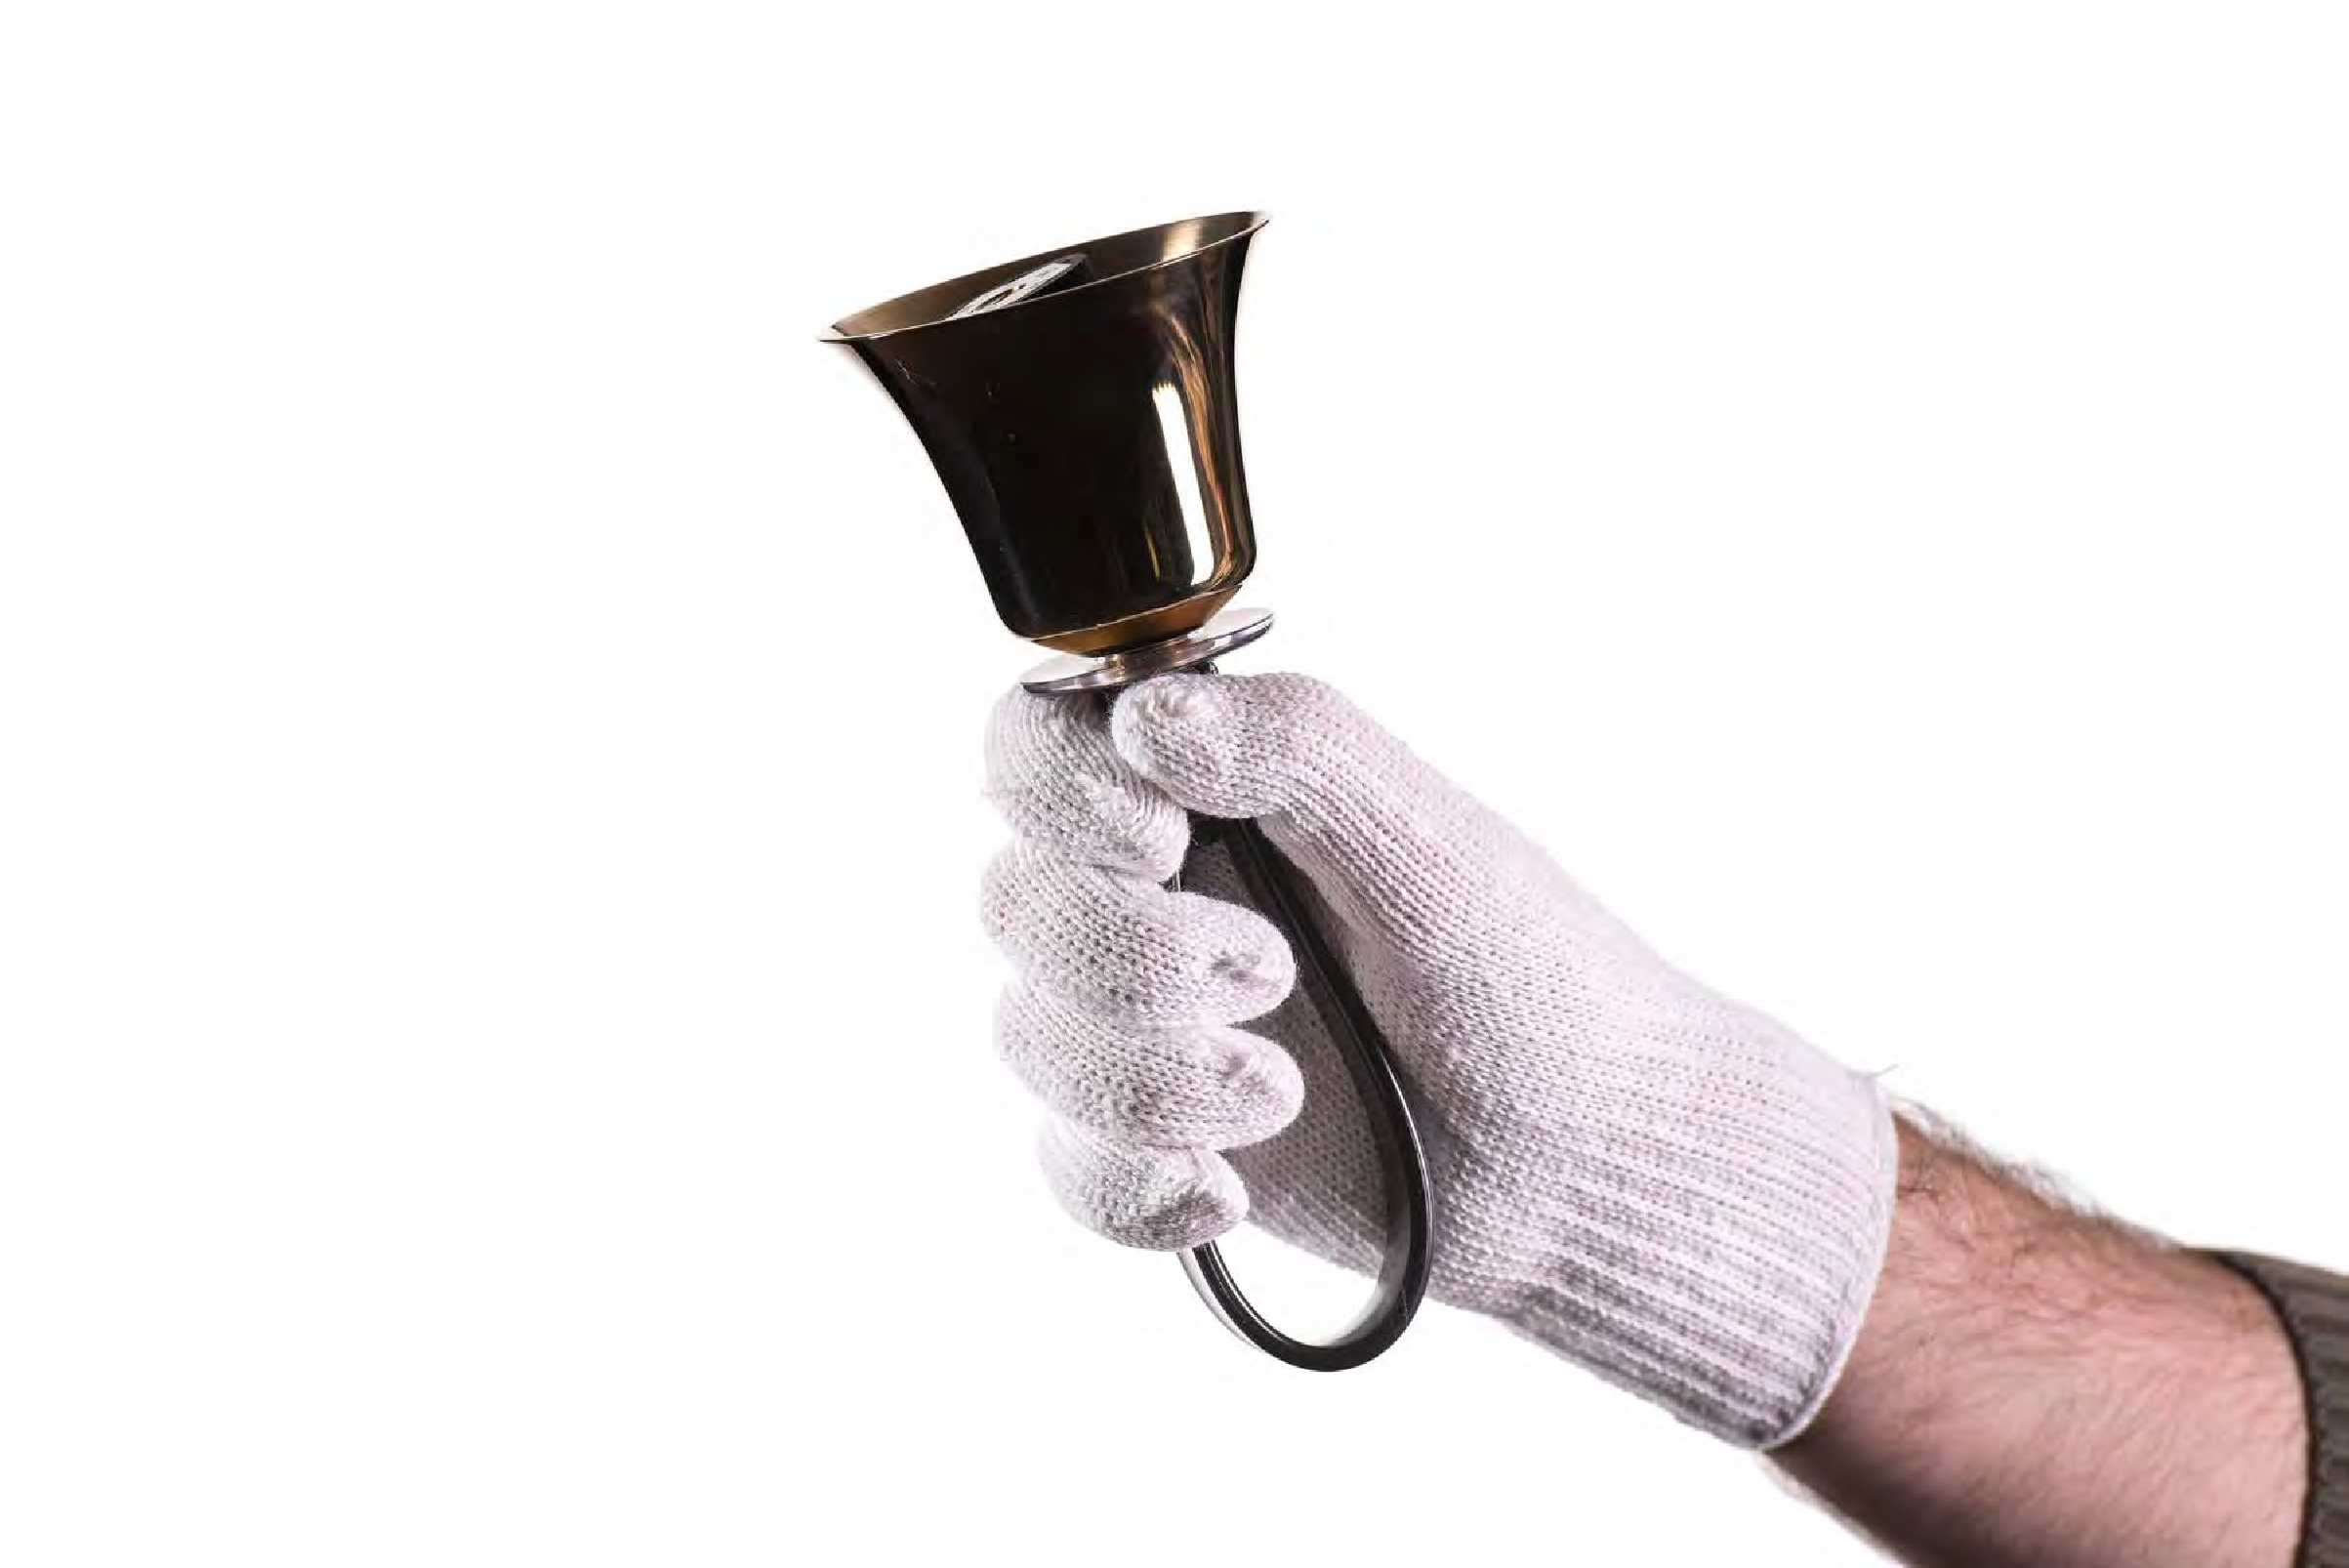 Handbell Heavyweight Knit Gloves- pkg of 6 White Only